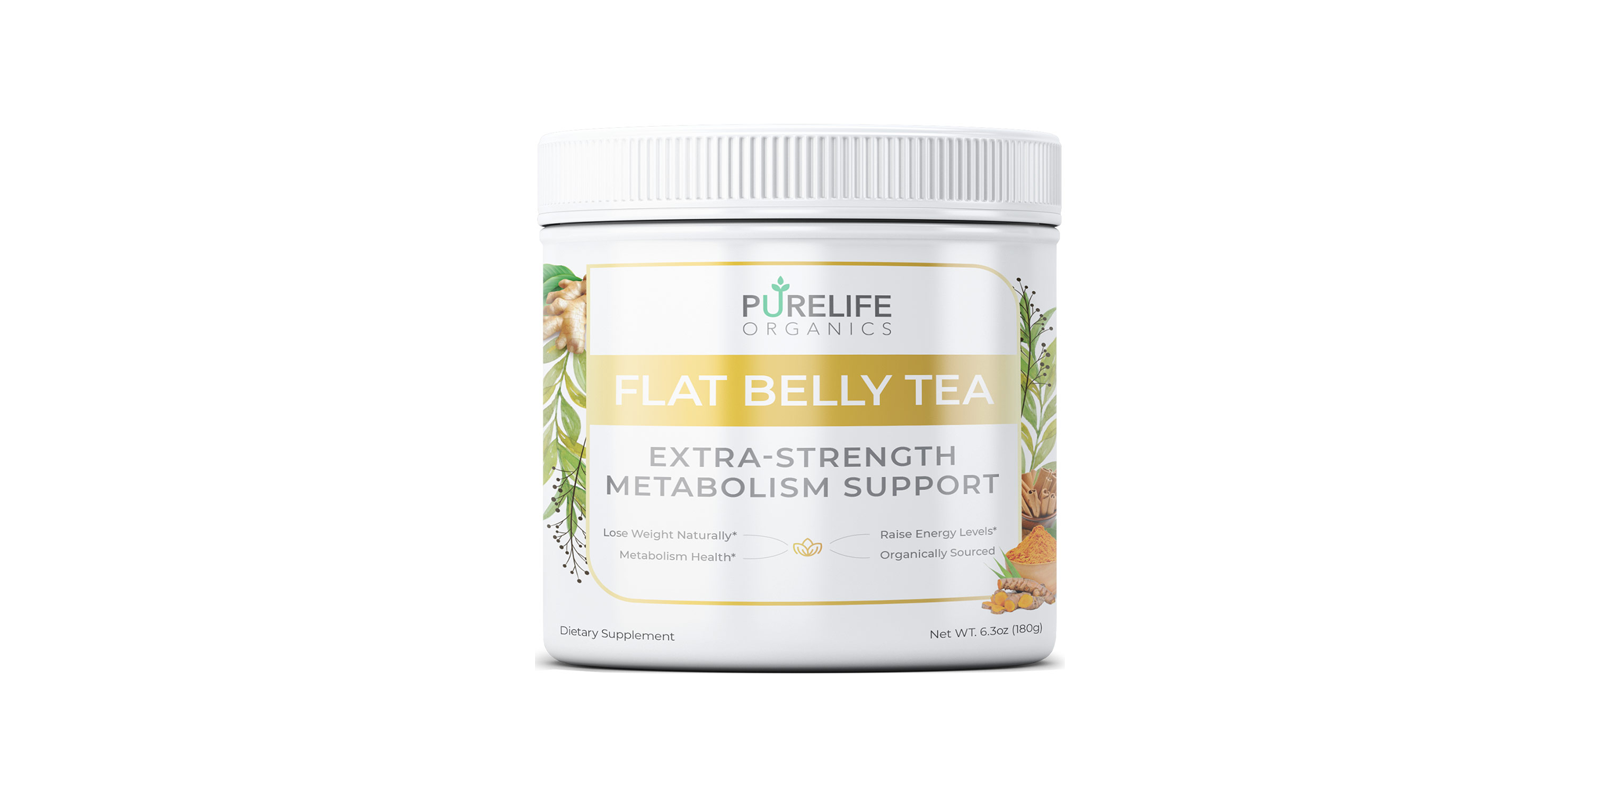 purelife organic flat belly tea review